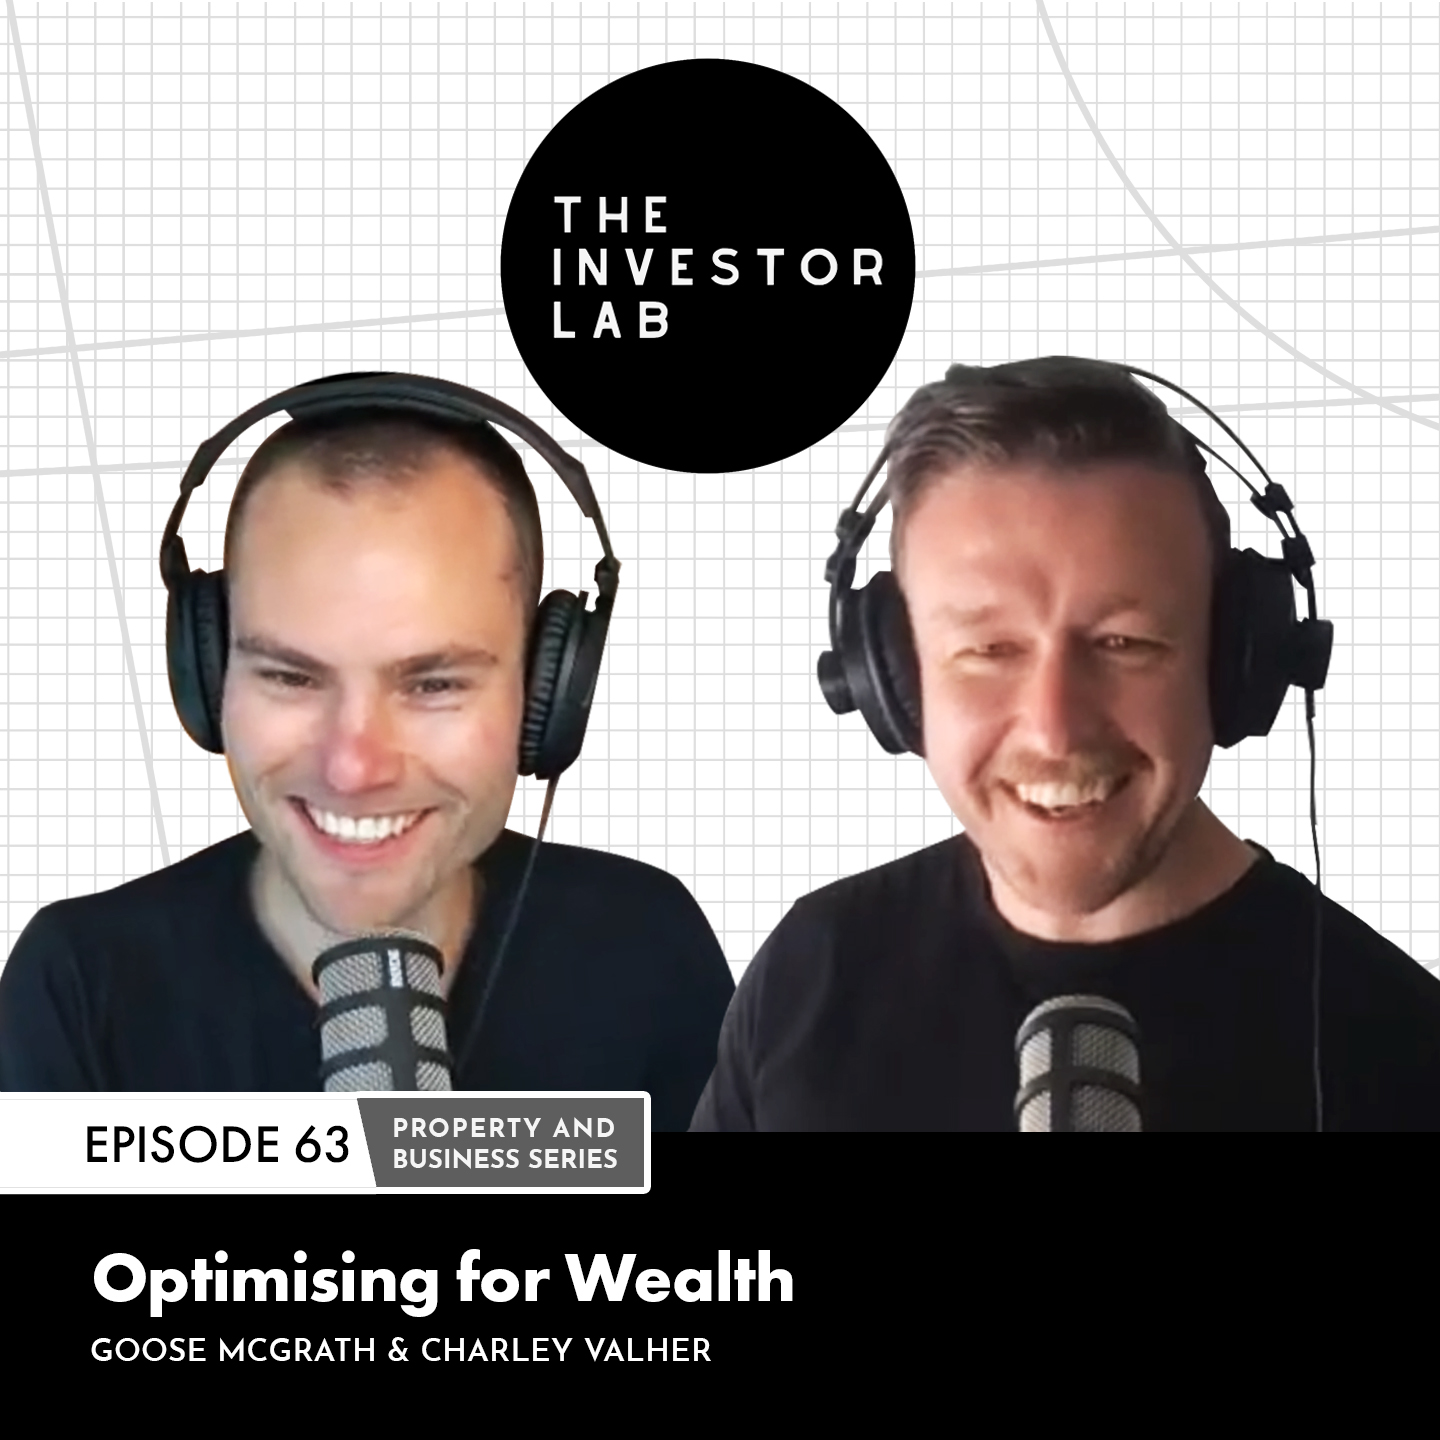 Optimising for Wealth